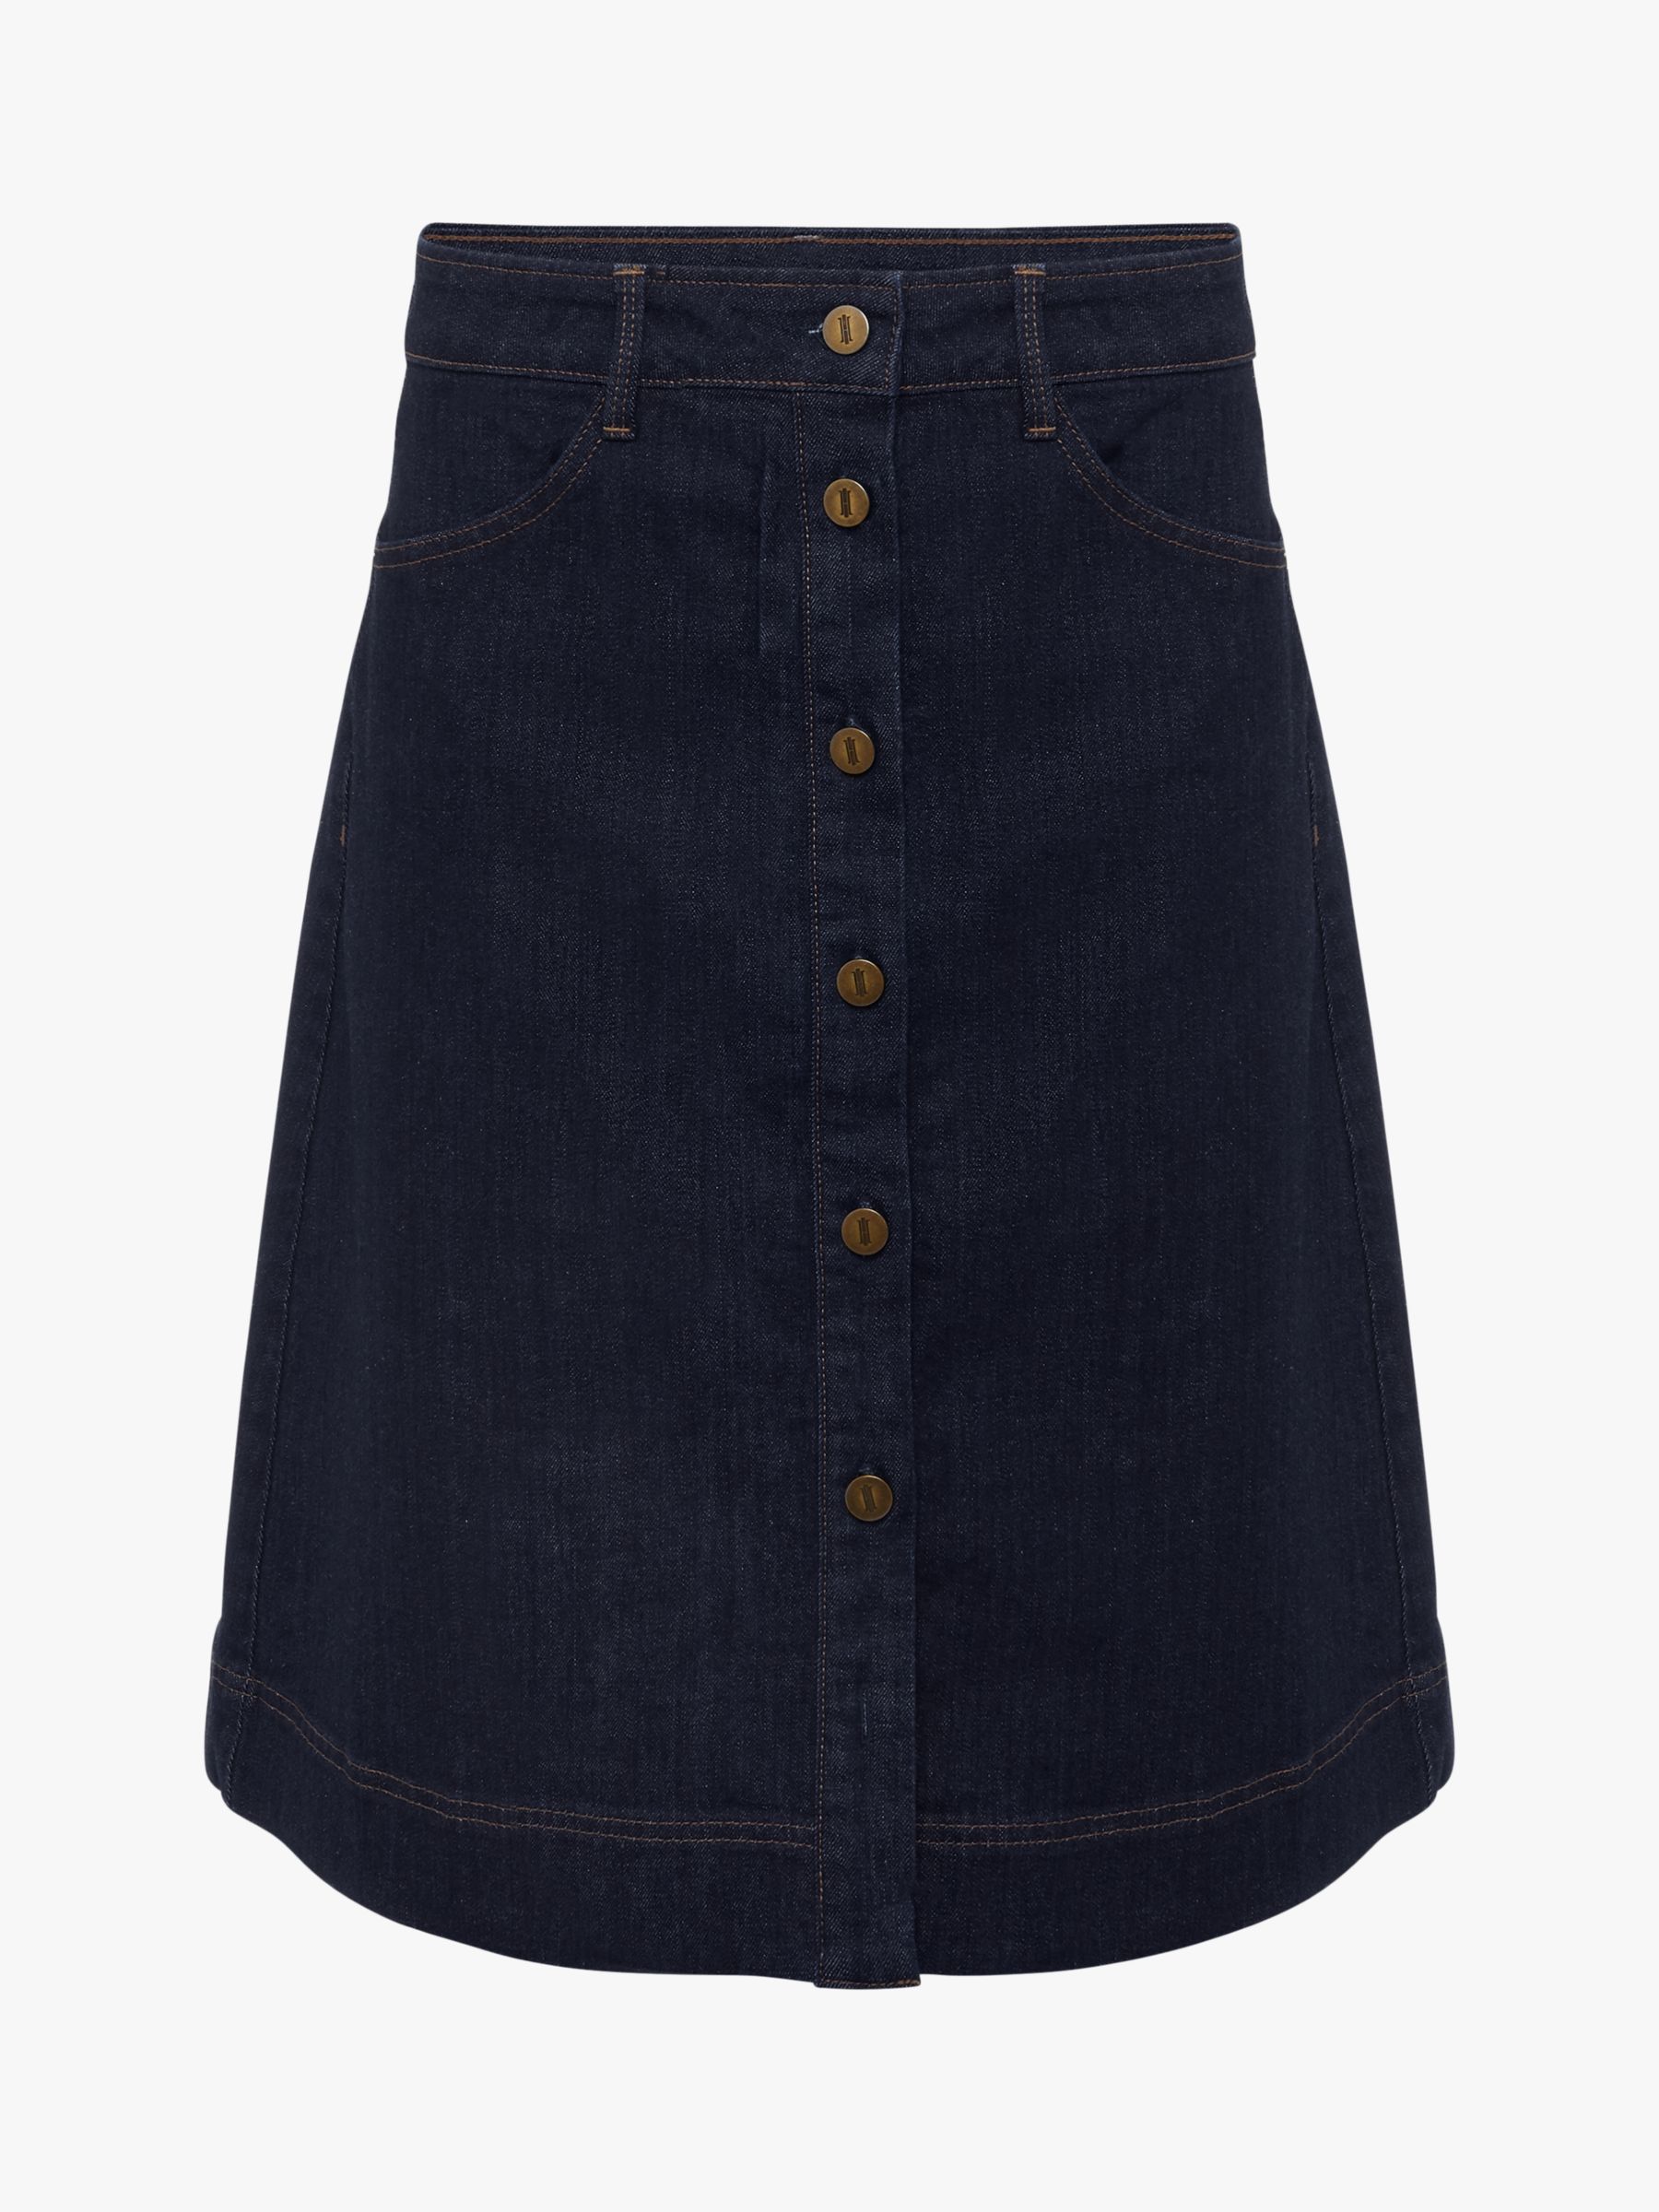 Hobbs Tabatha Denim Skirt, Indigo at John Lewis & Partners